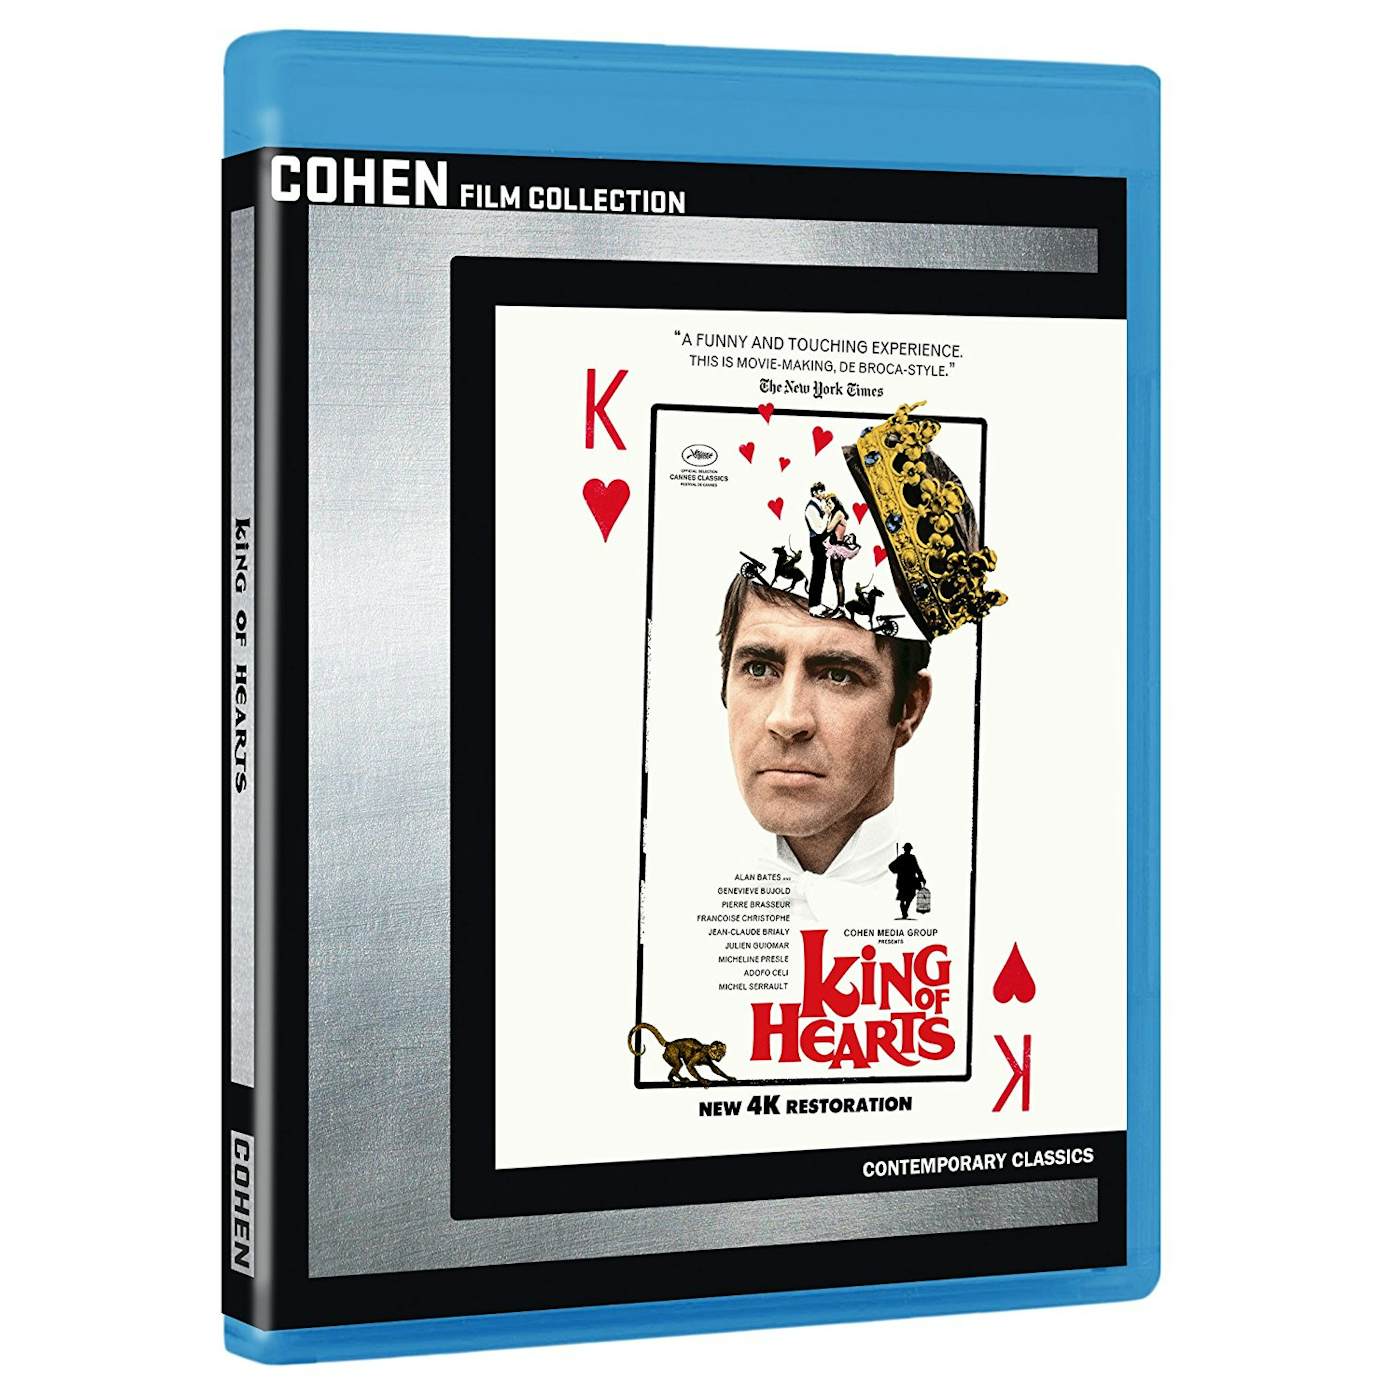 KING OF HEARTS Blu-ray